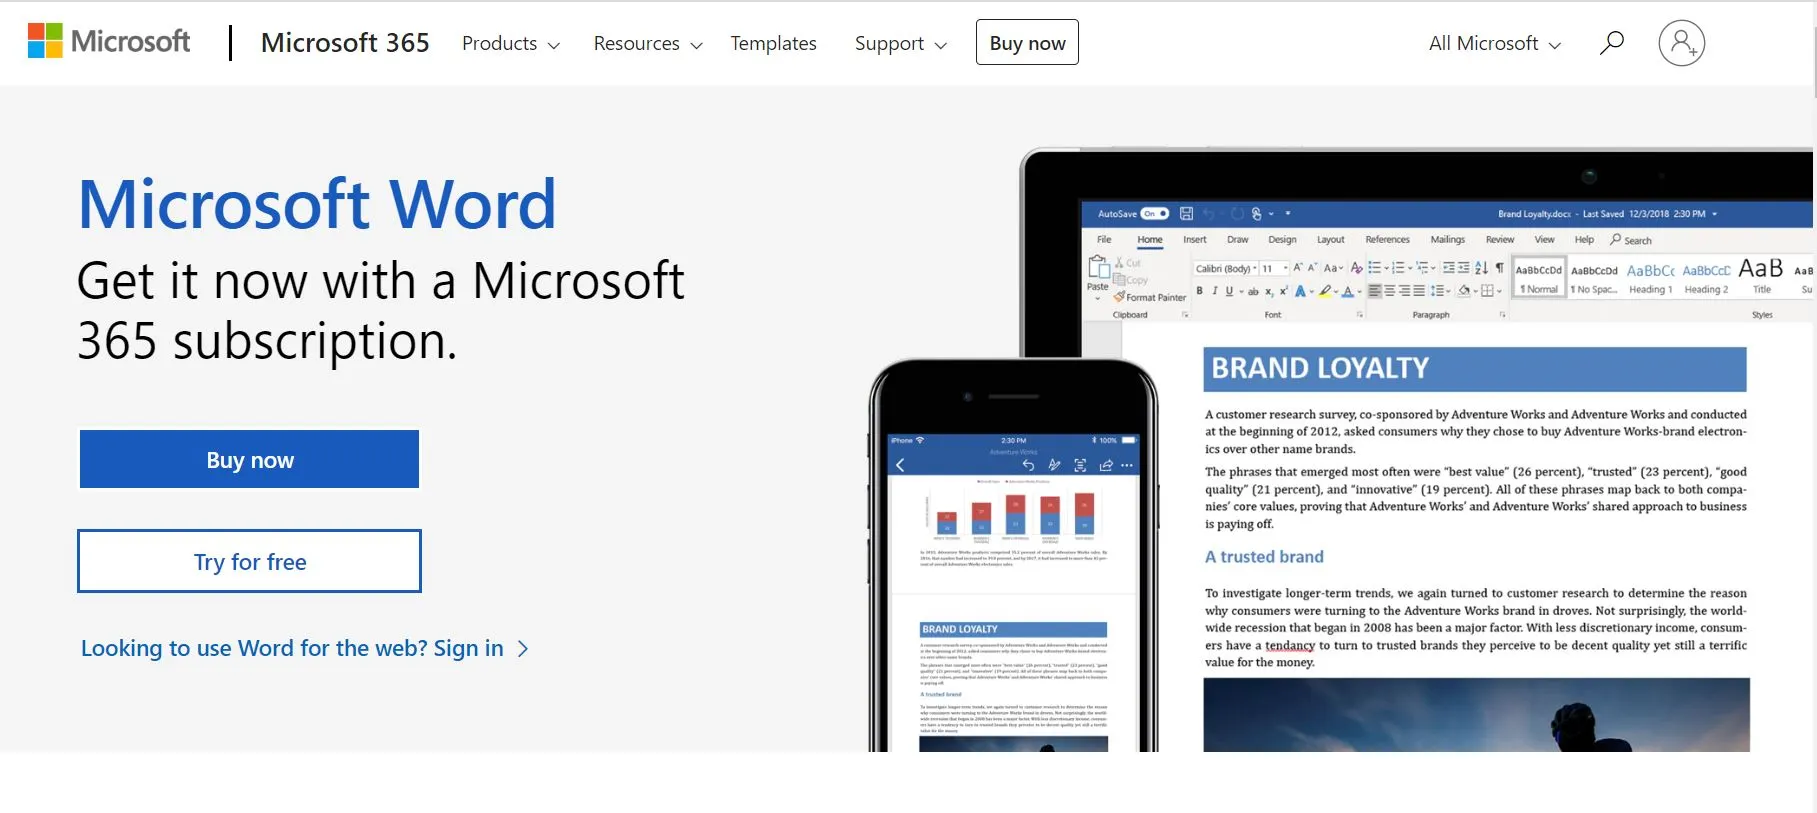 Microsoft Word homepage